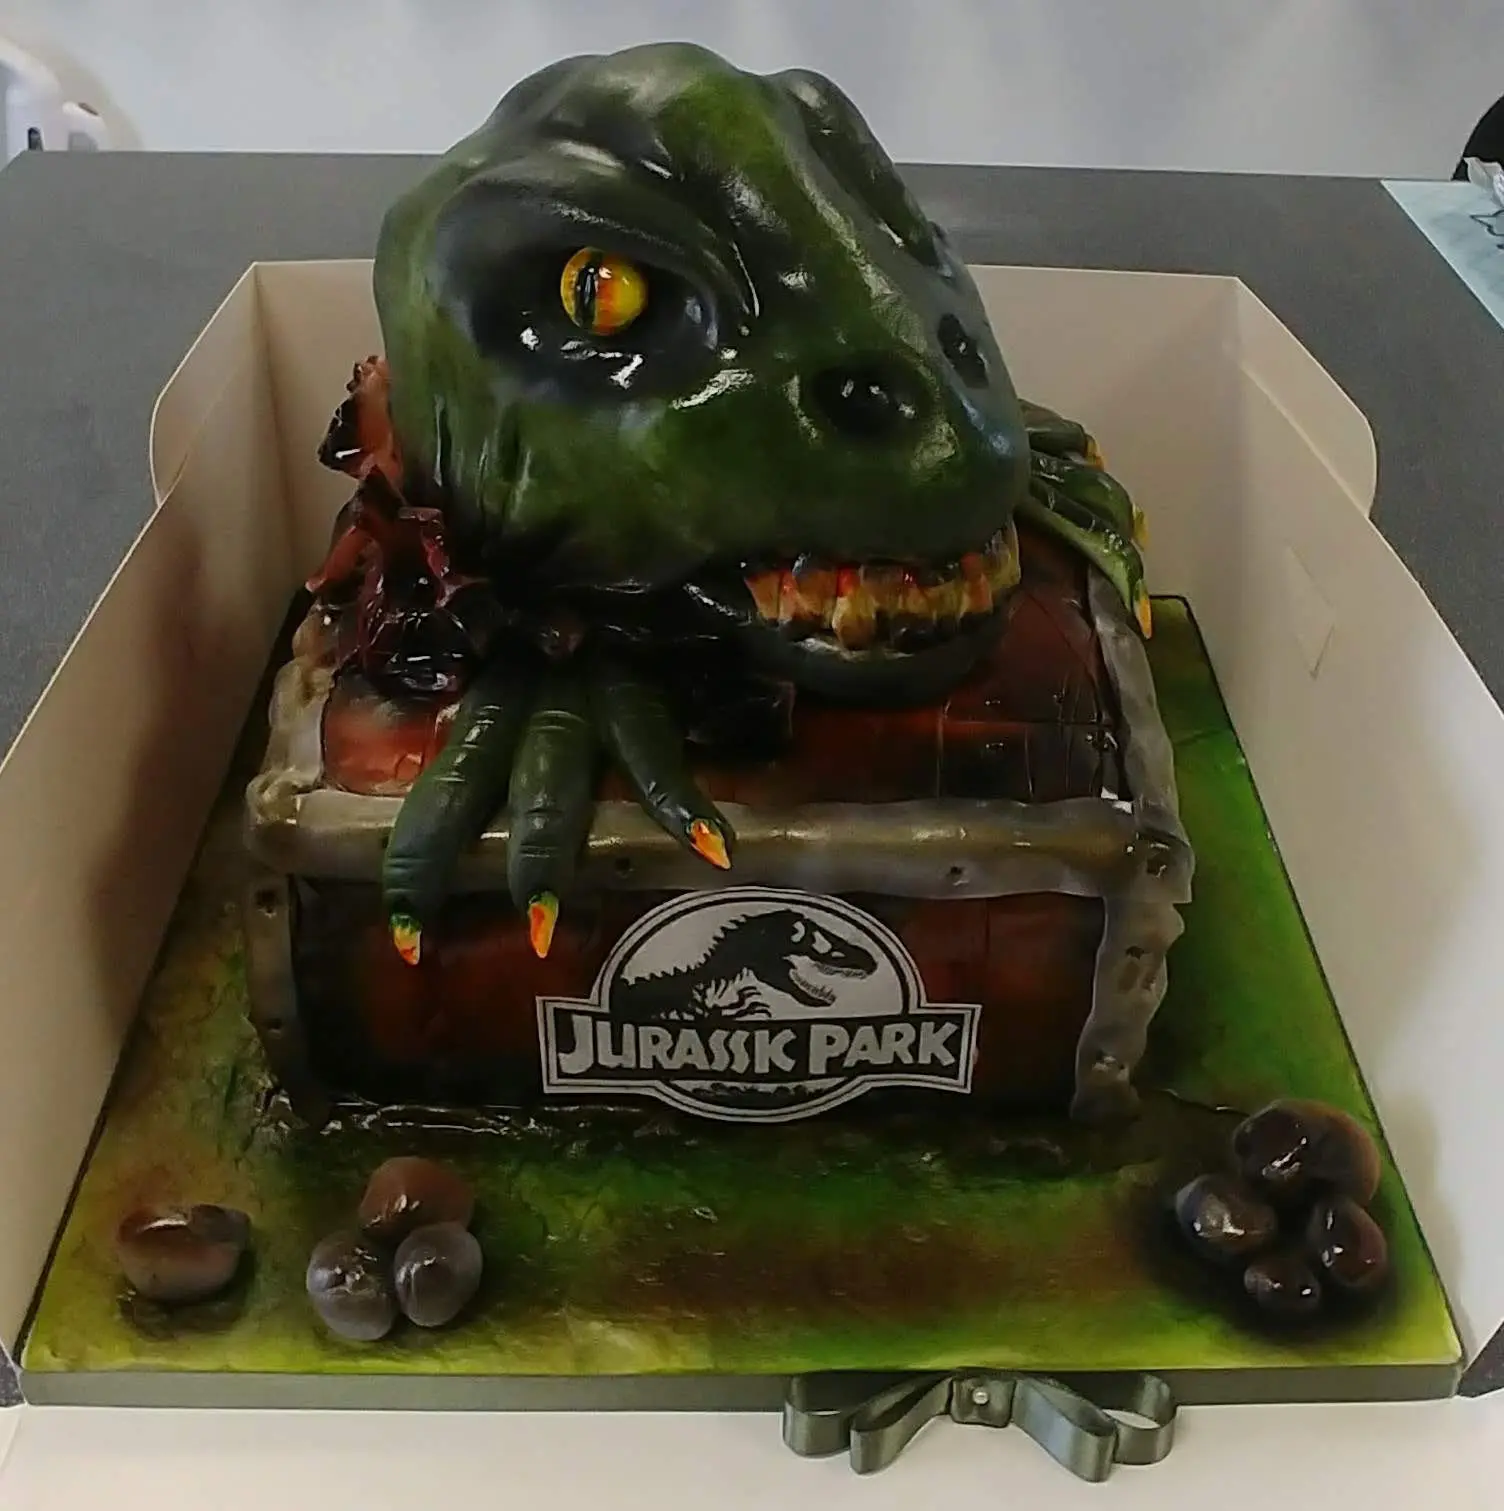 Chocolate cake with dinosaurs. Jurassic world. : r/Baking